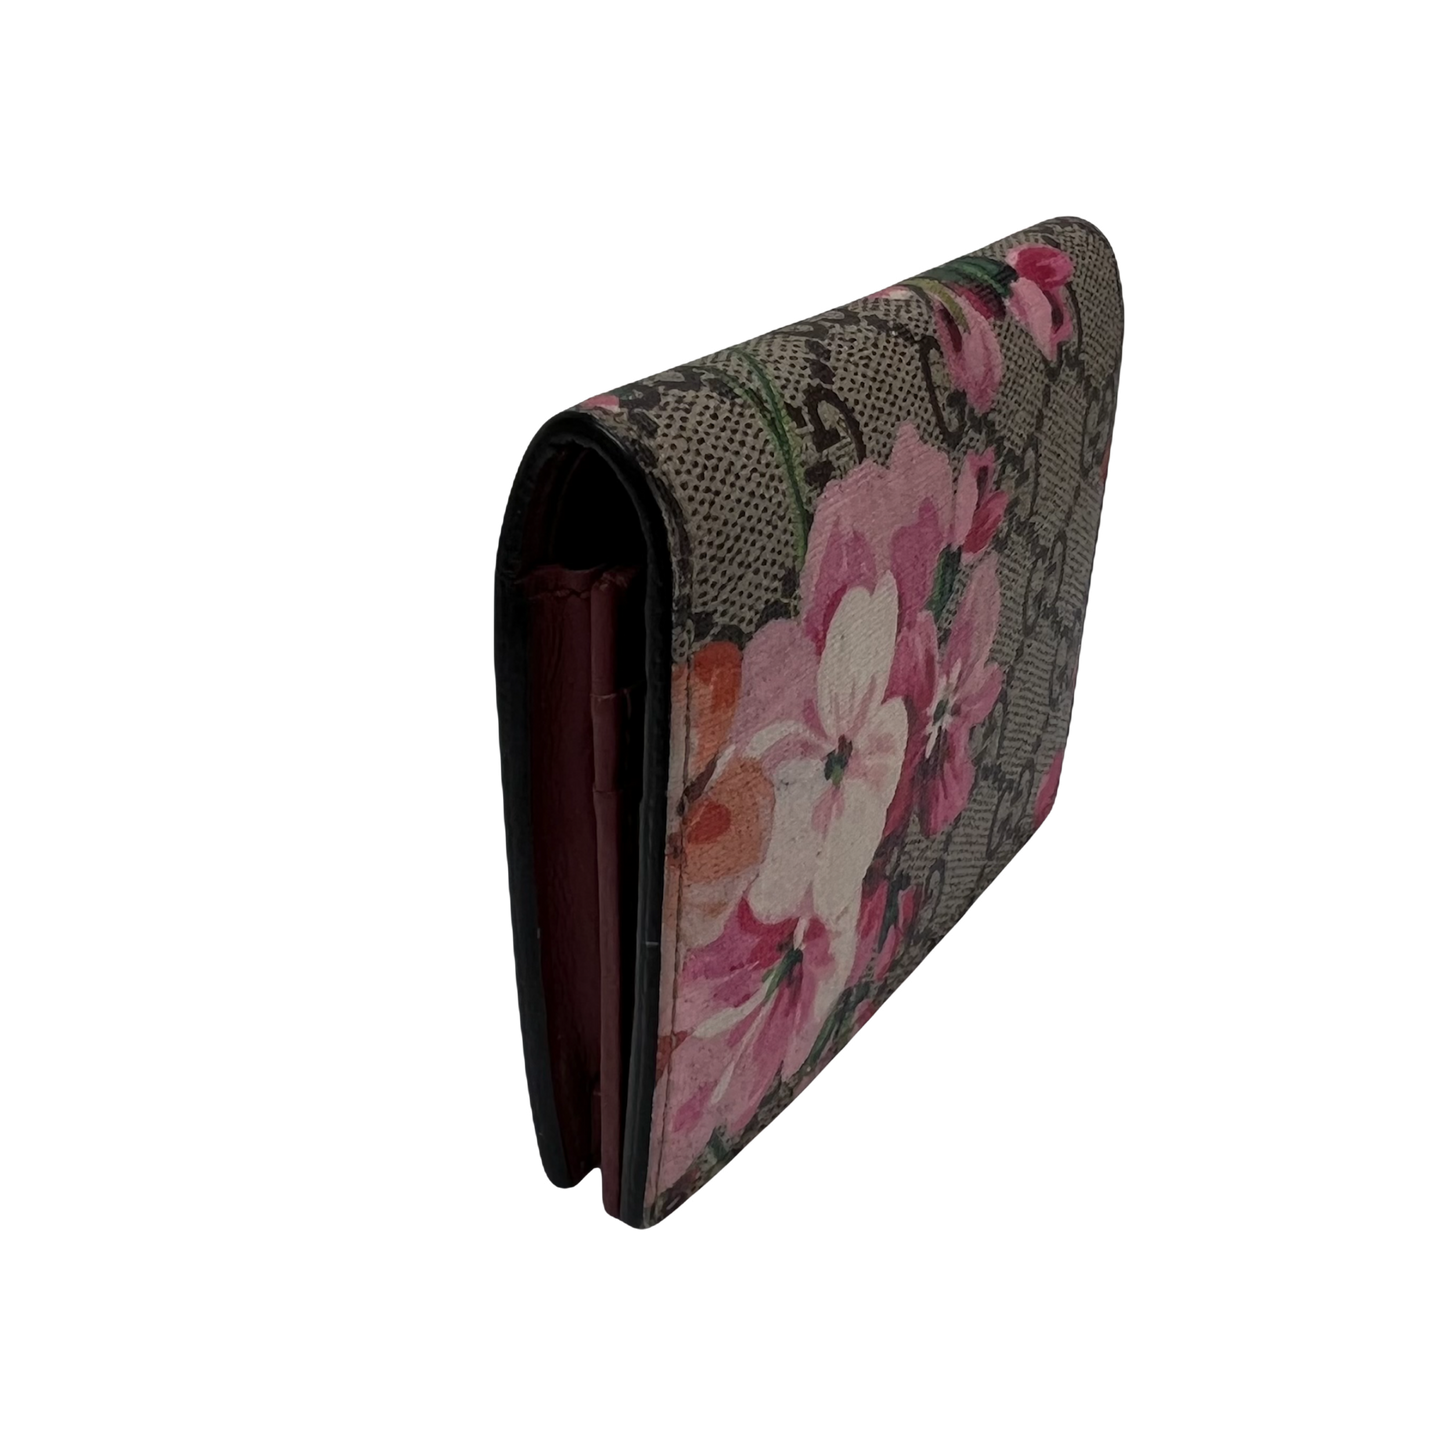 Gucci GG Supreme Blooms Bi-Fold Wallet Pink